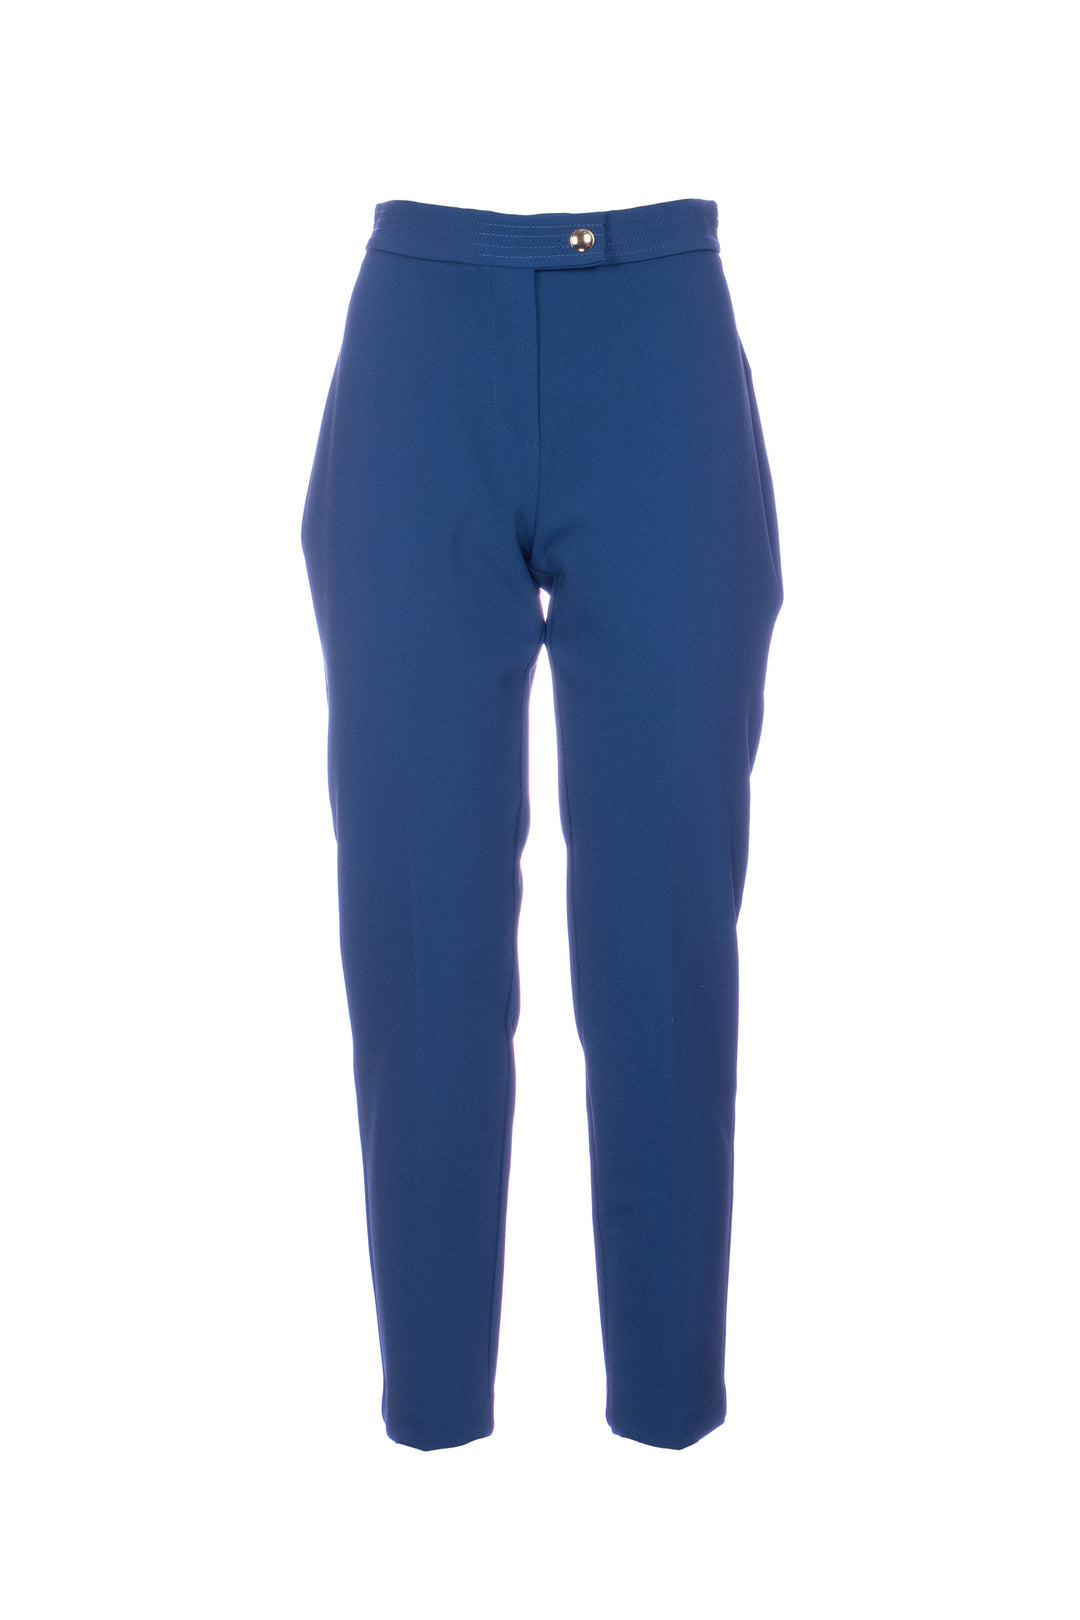 KAOS Pantalone dritto blu in tessuto tecnico - Mancinelli 1954